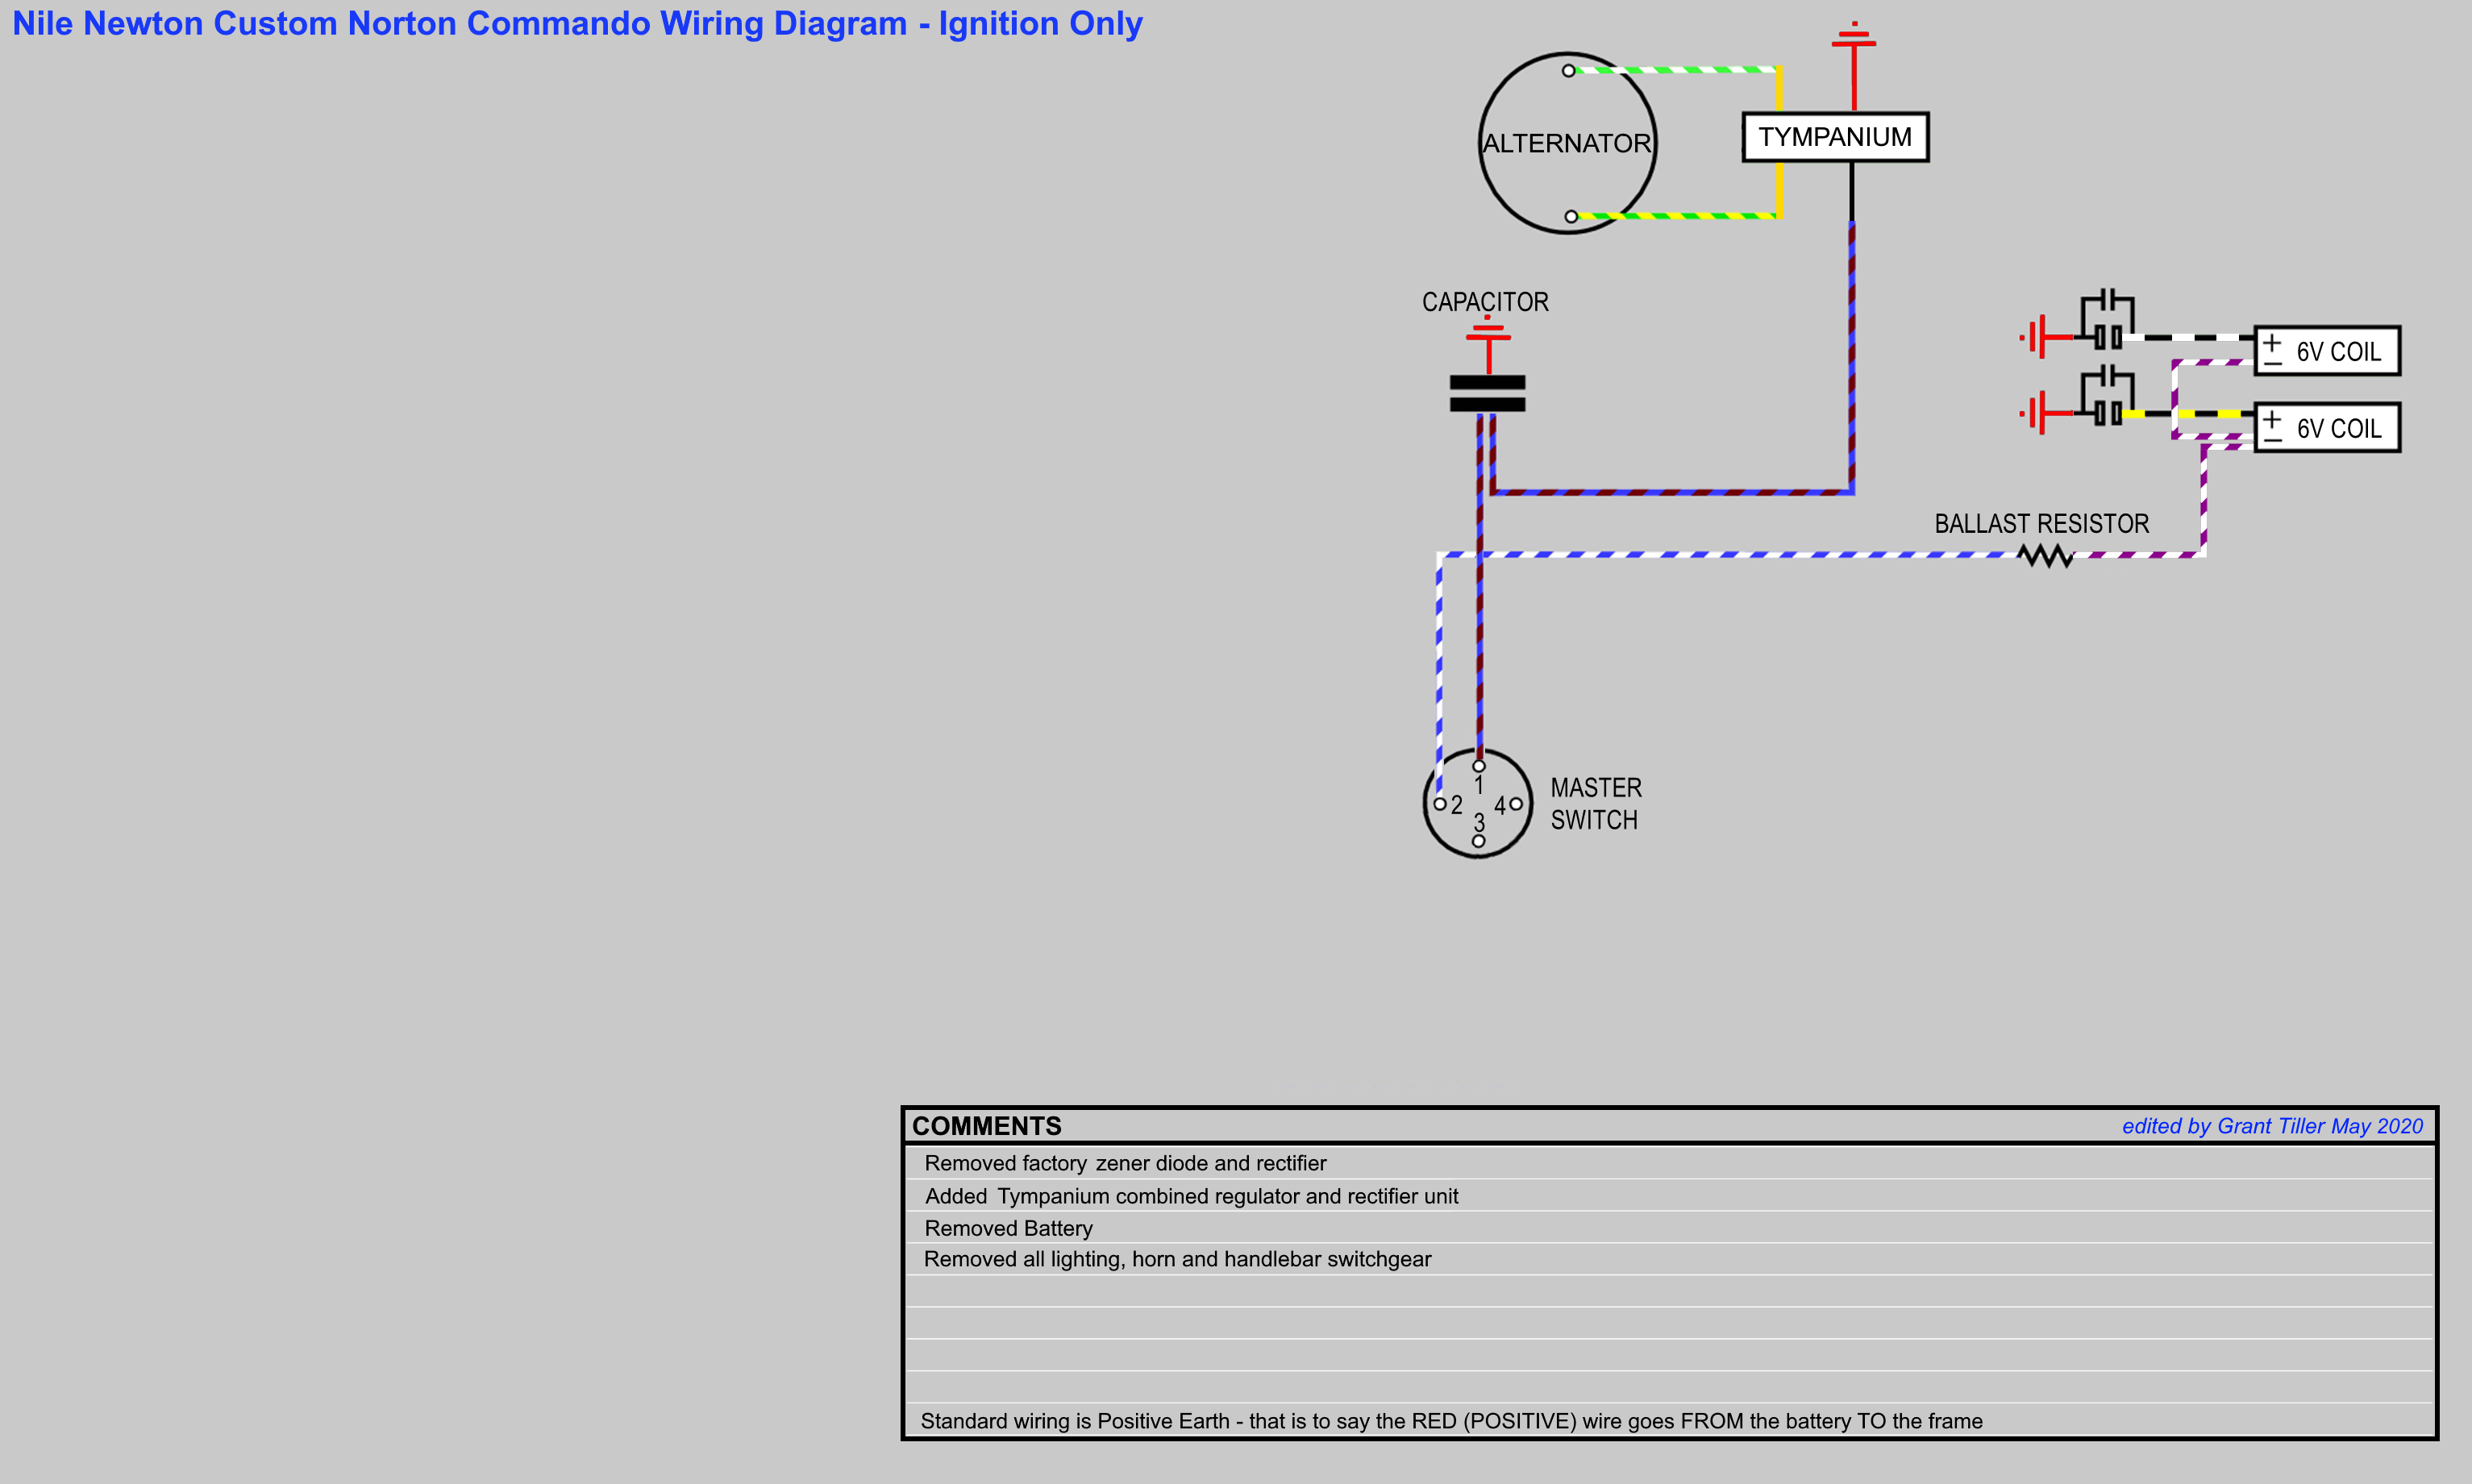 Commando Wiring Diagram from granttiller.com